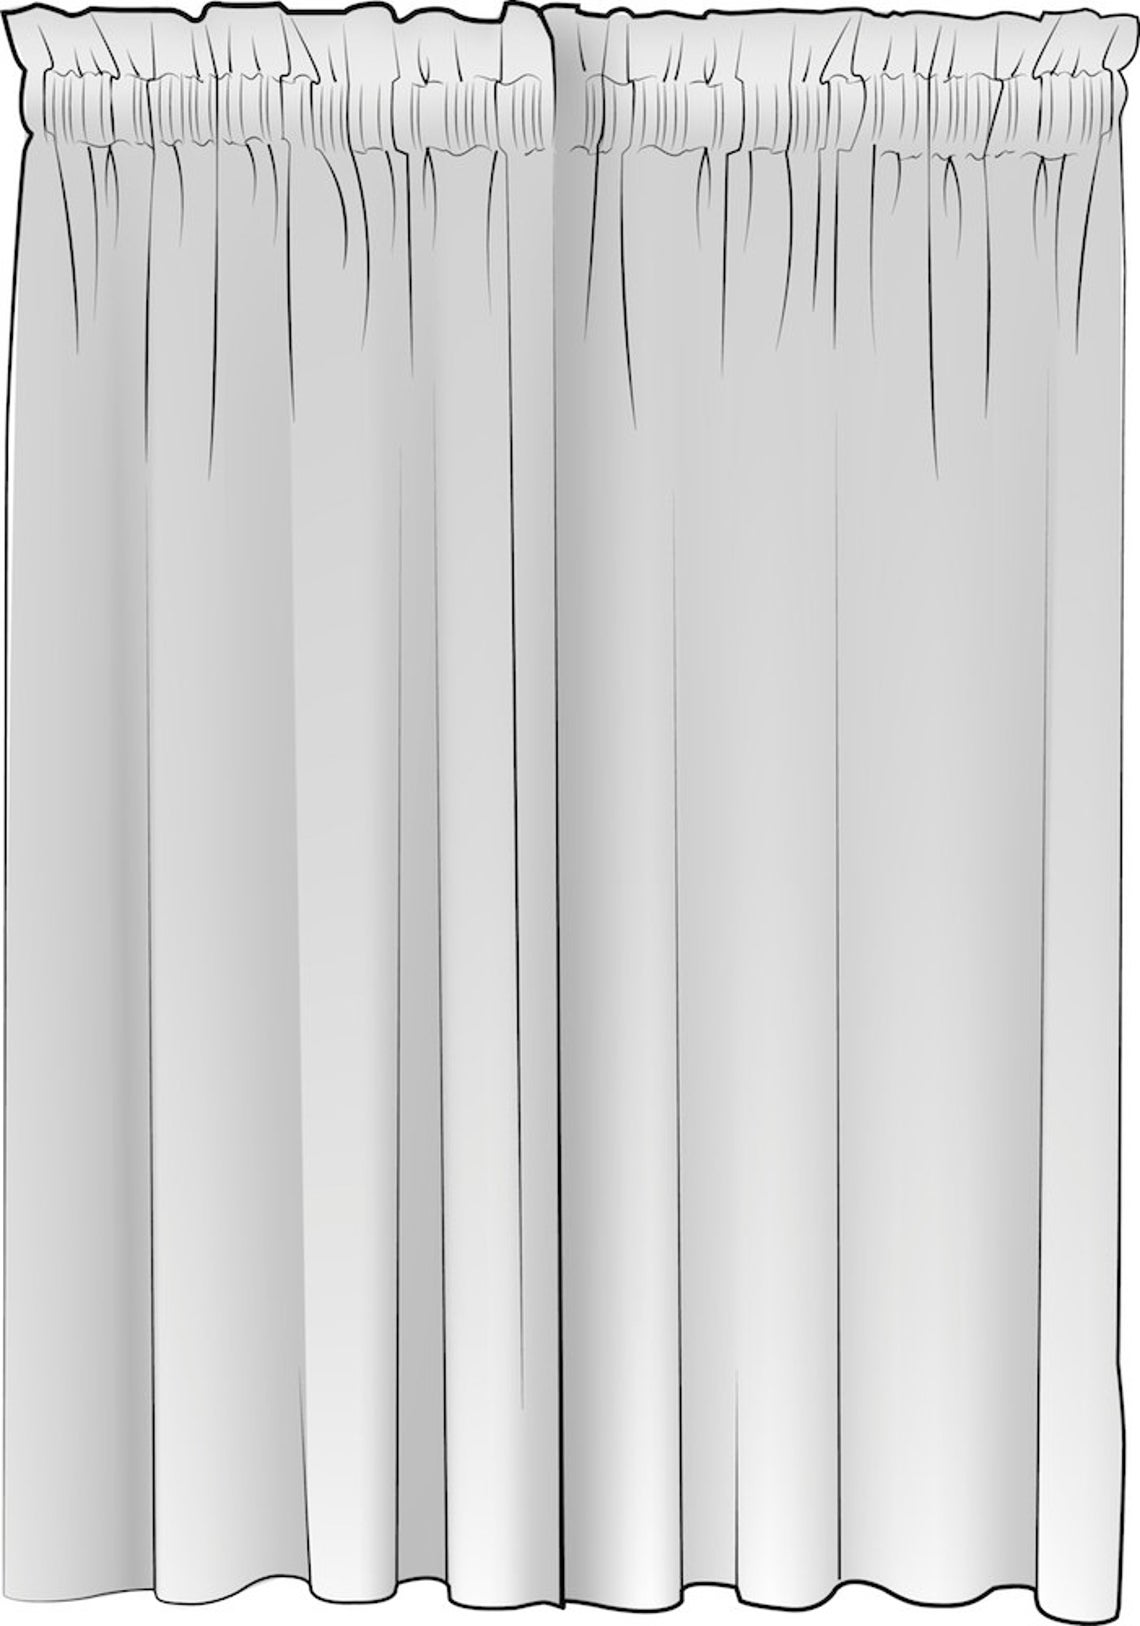 rod pocket curtain panels pair in anderson monarch orange buffalo check plaid